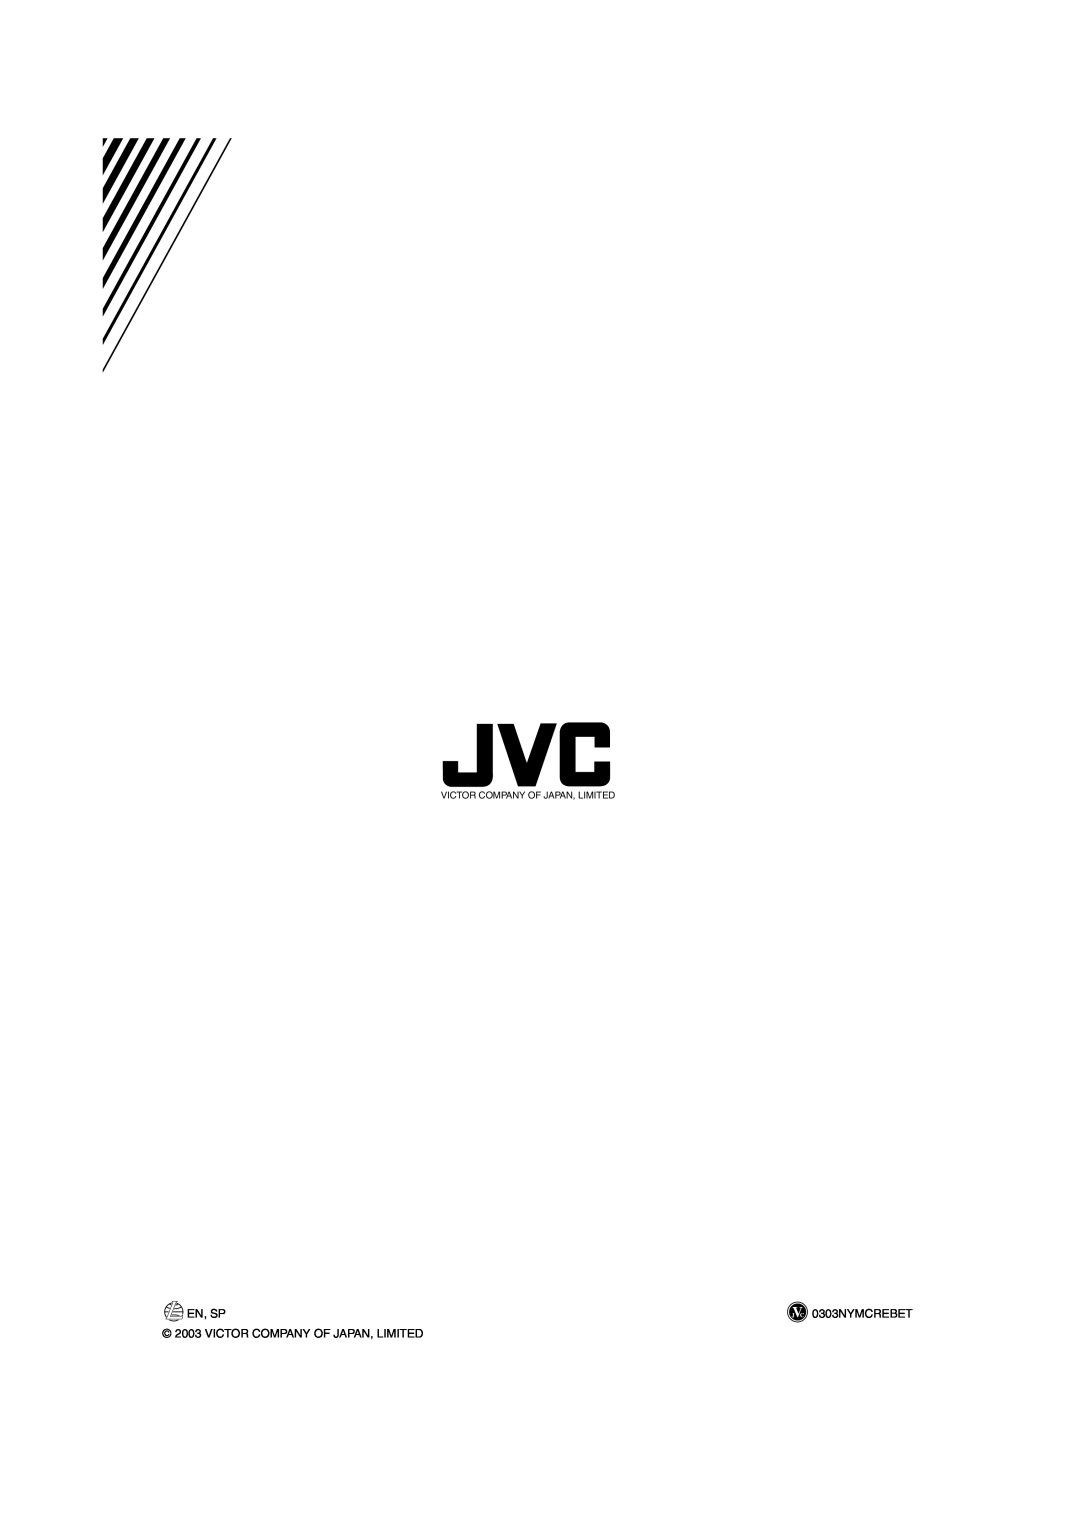 JVC MX-KA5JW manual En, Sp, 0303NYMCREBET, Victor Company Of Japan, Limited 